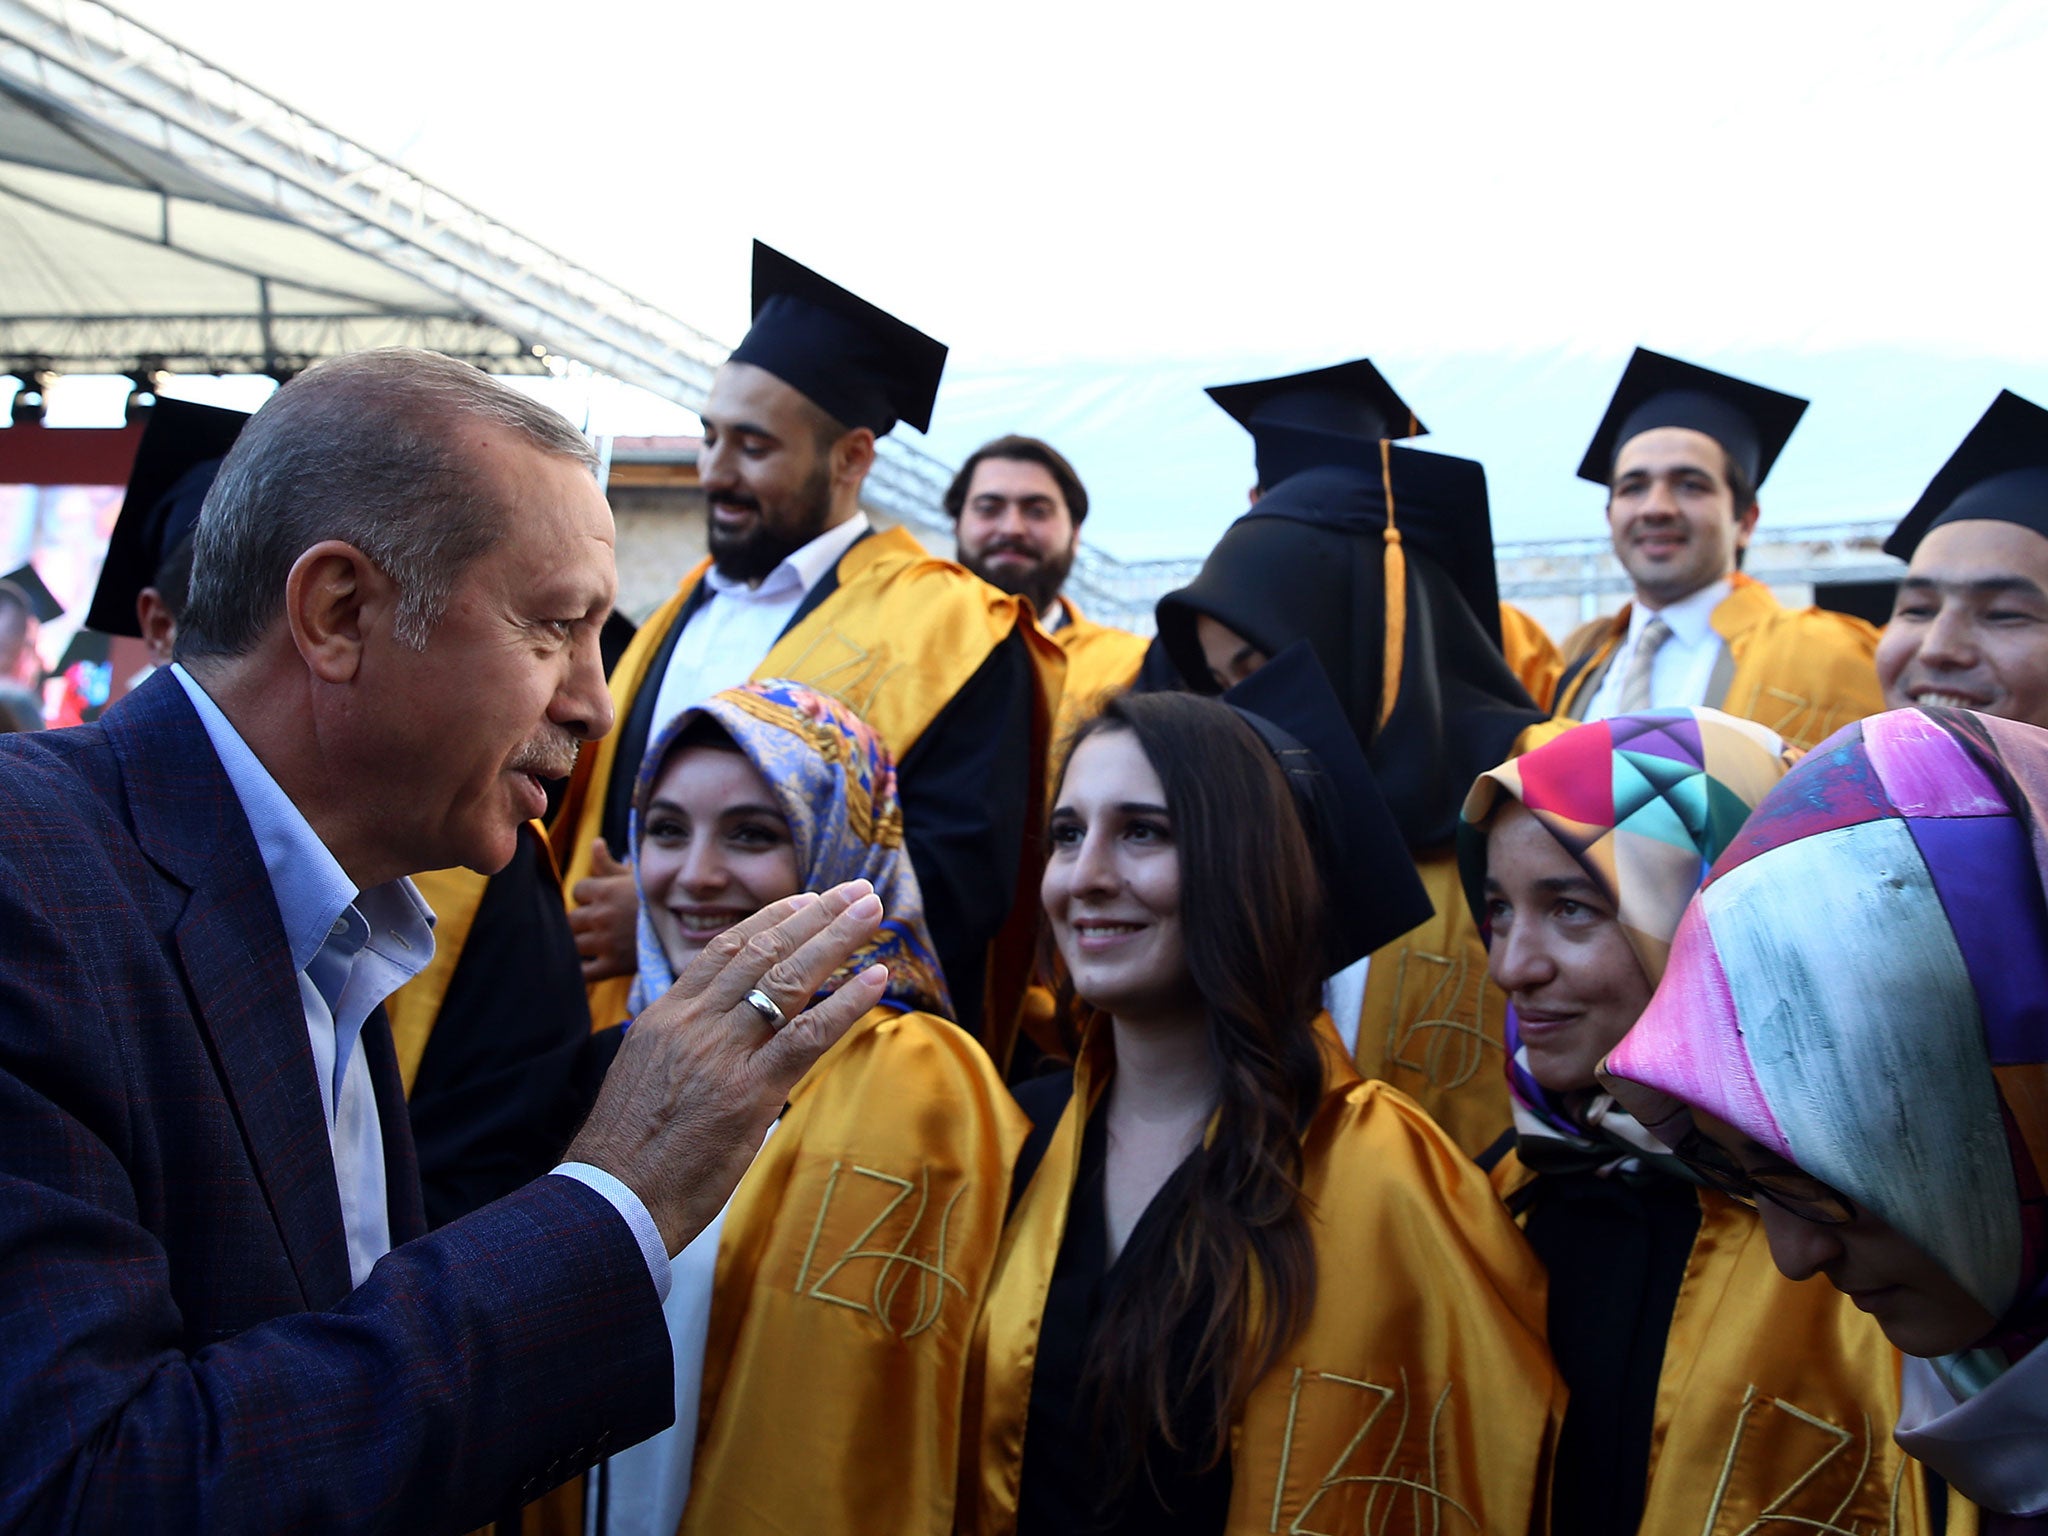 Turkey's President Recep Tayyip Erdogan speaks with students at the Sabahattin Zaim University in Istanbul